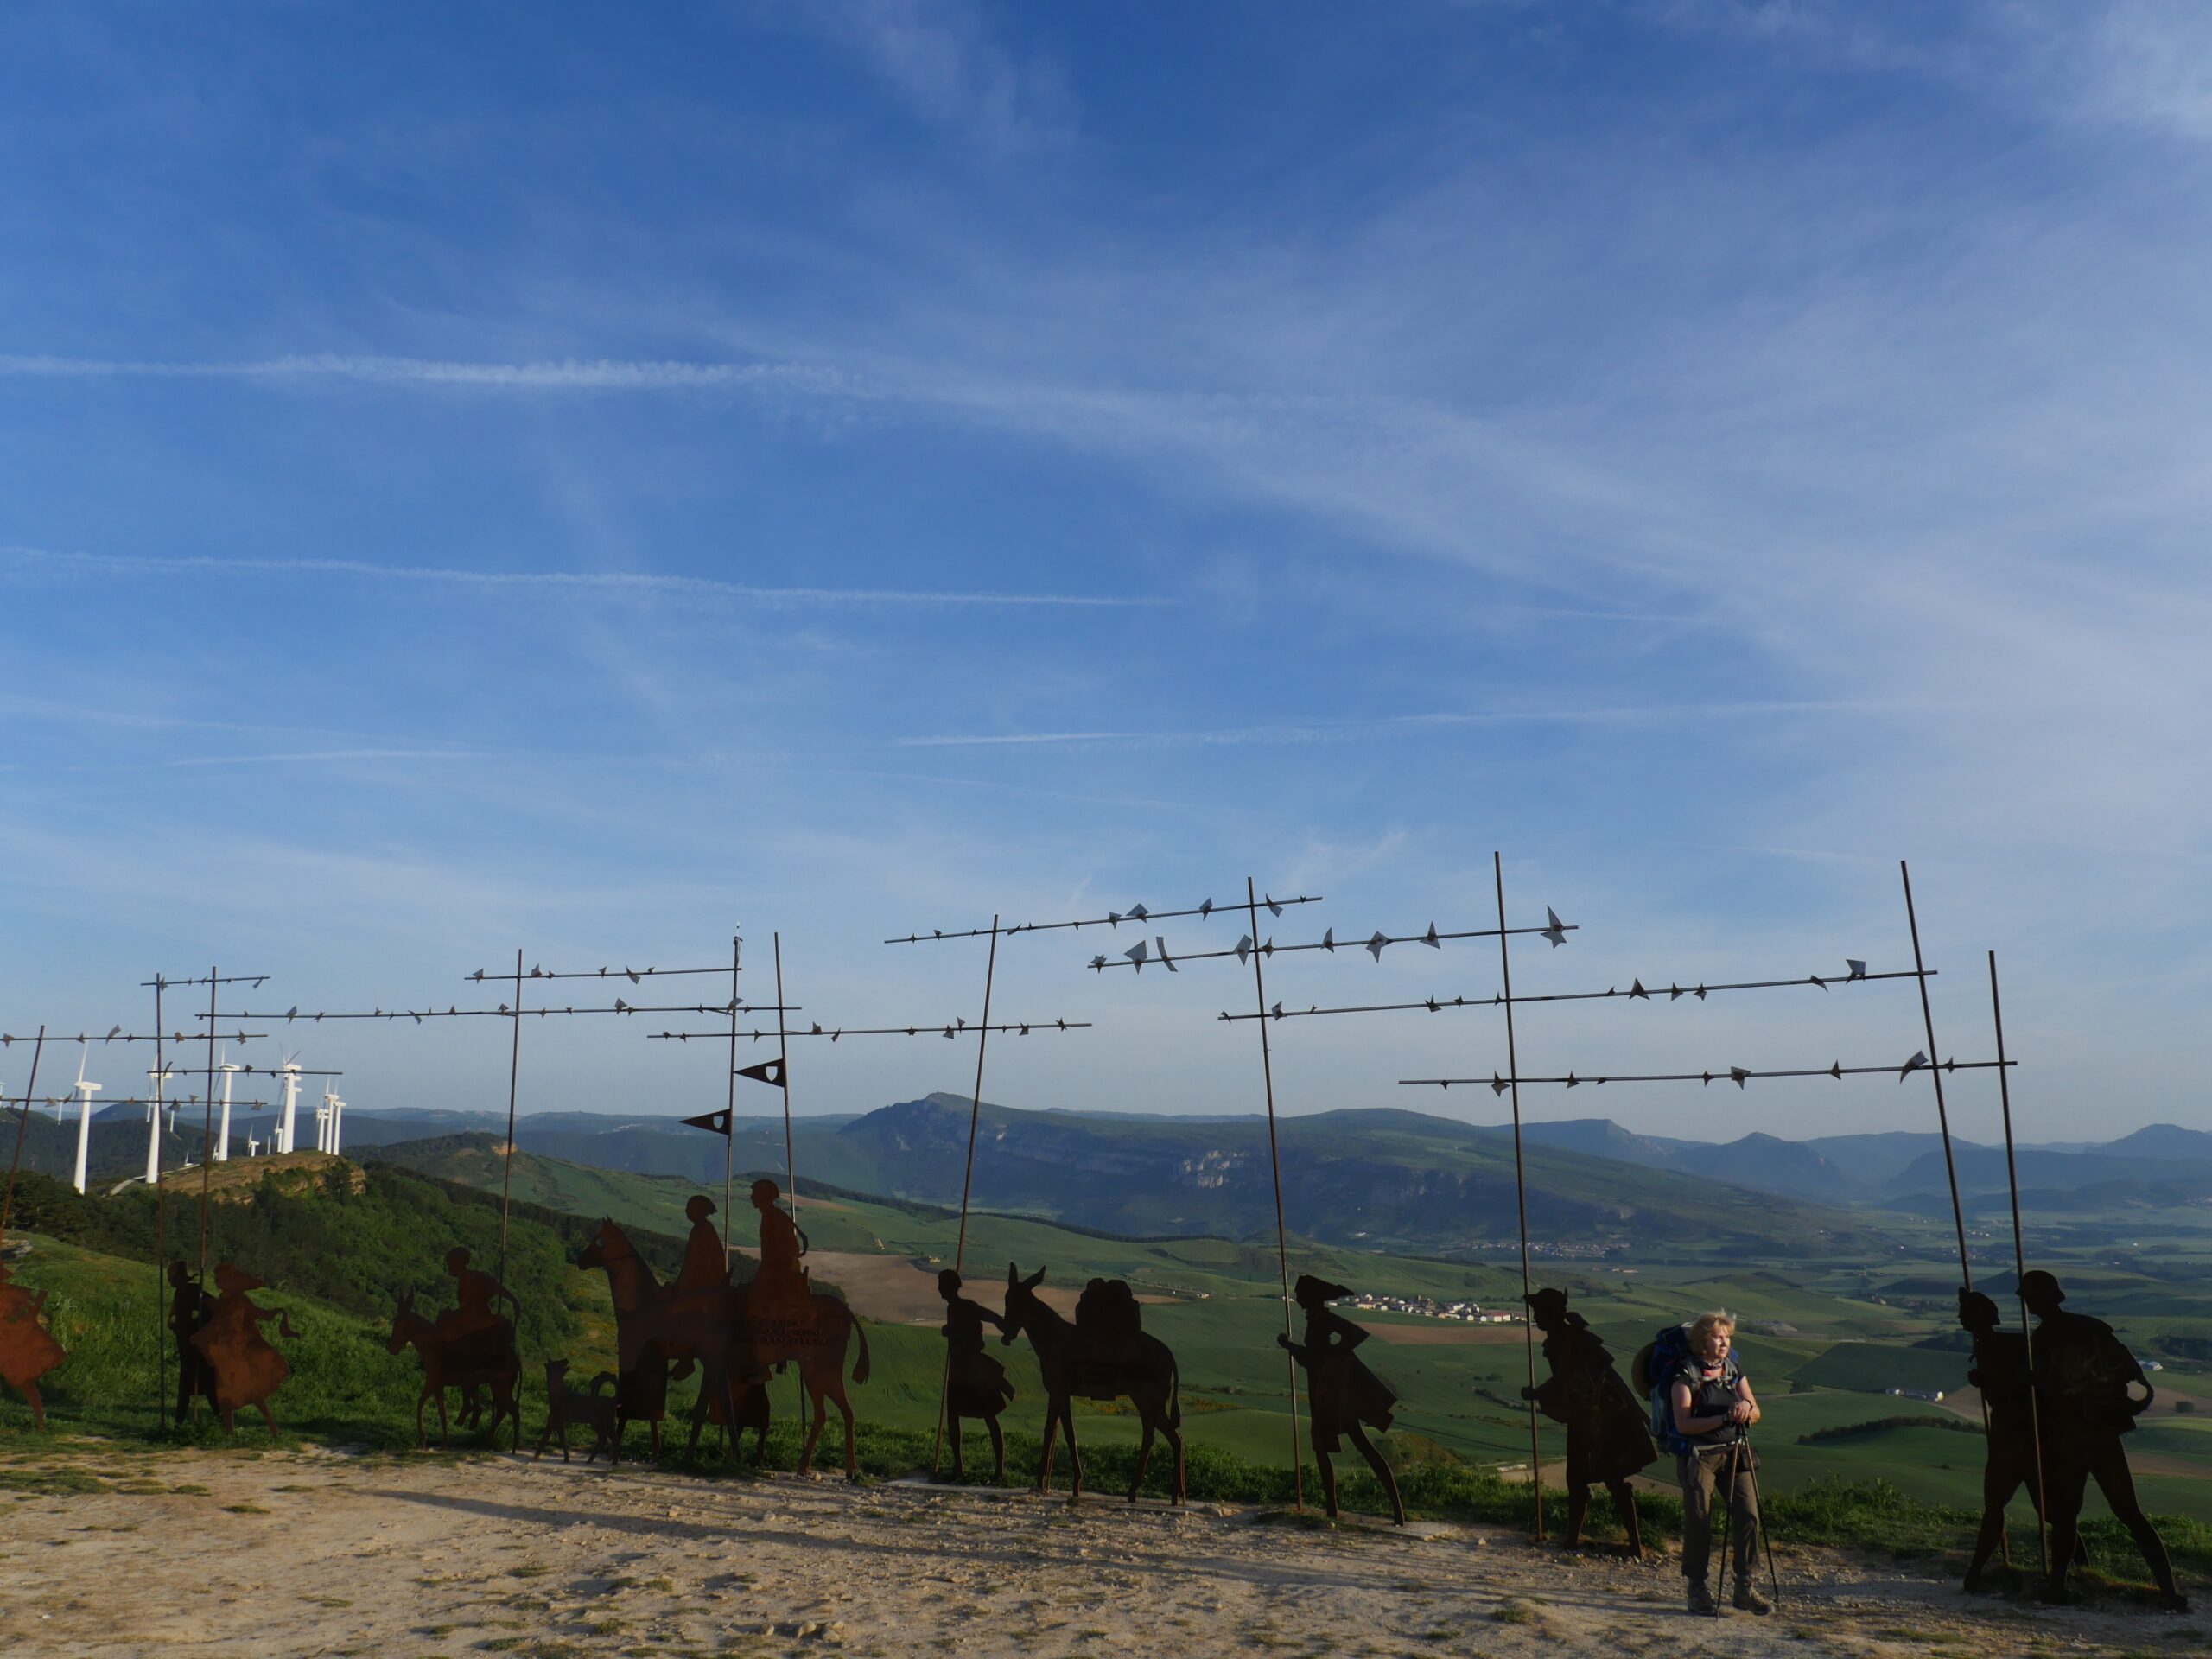 An art installation depicting pilgrims walking the Camino de Santiago sits on a ridge above Zariquiegui, Spain.